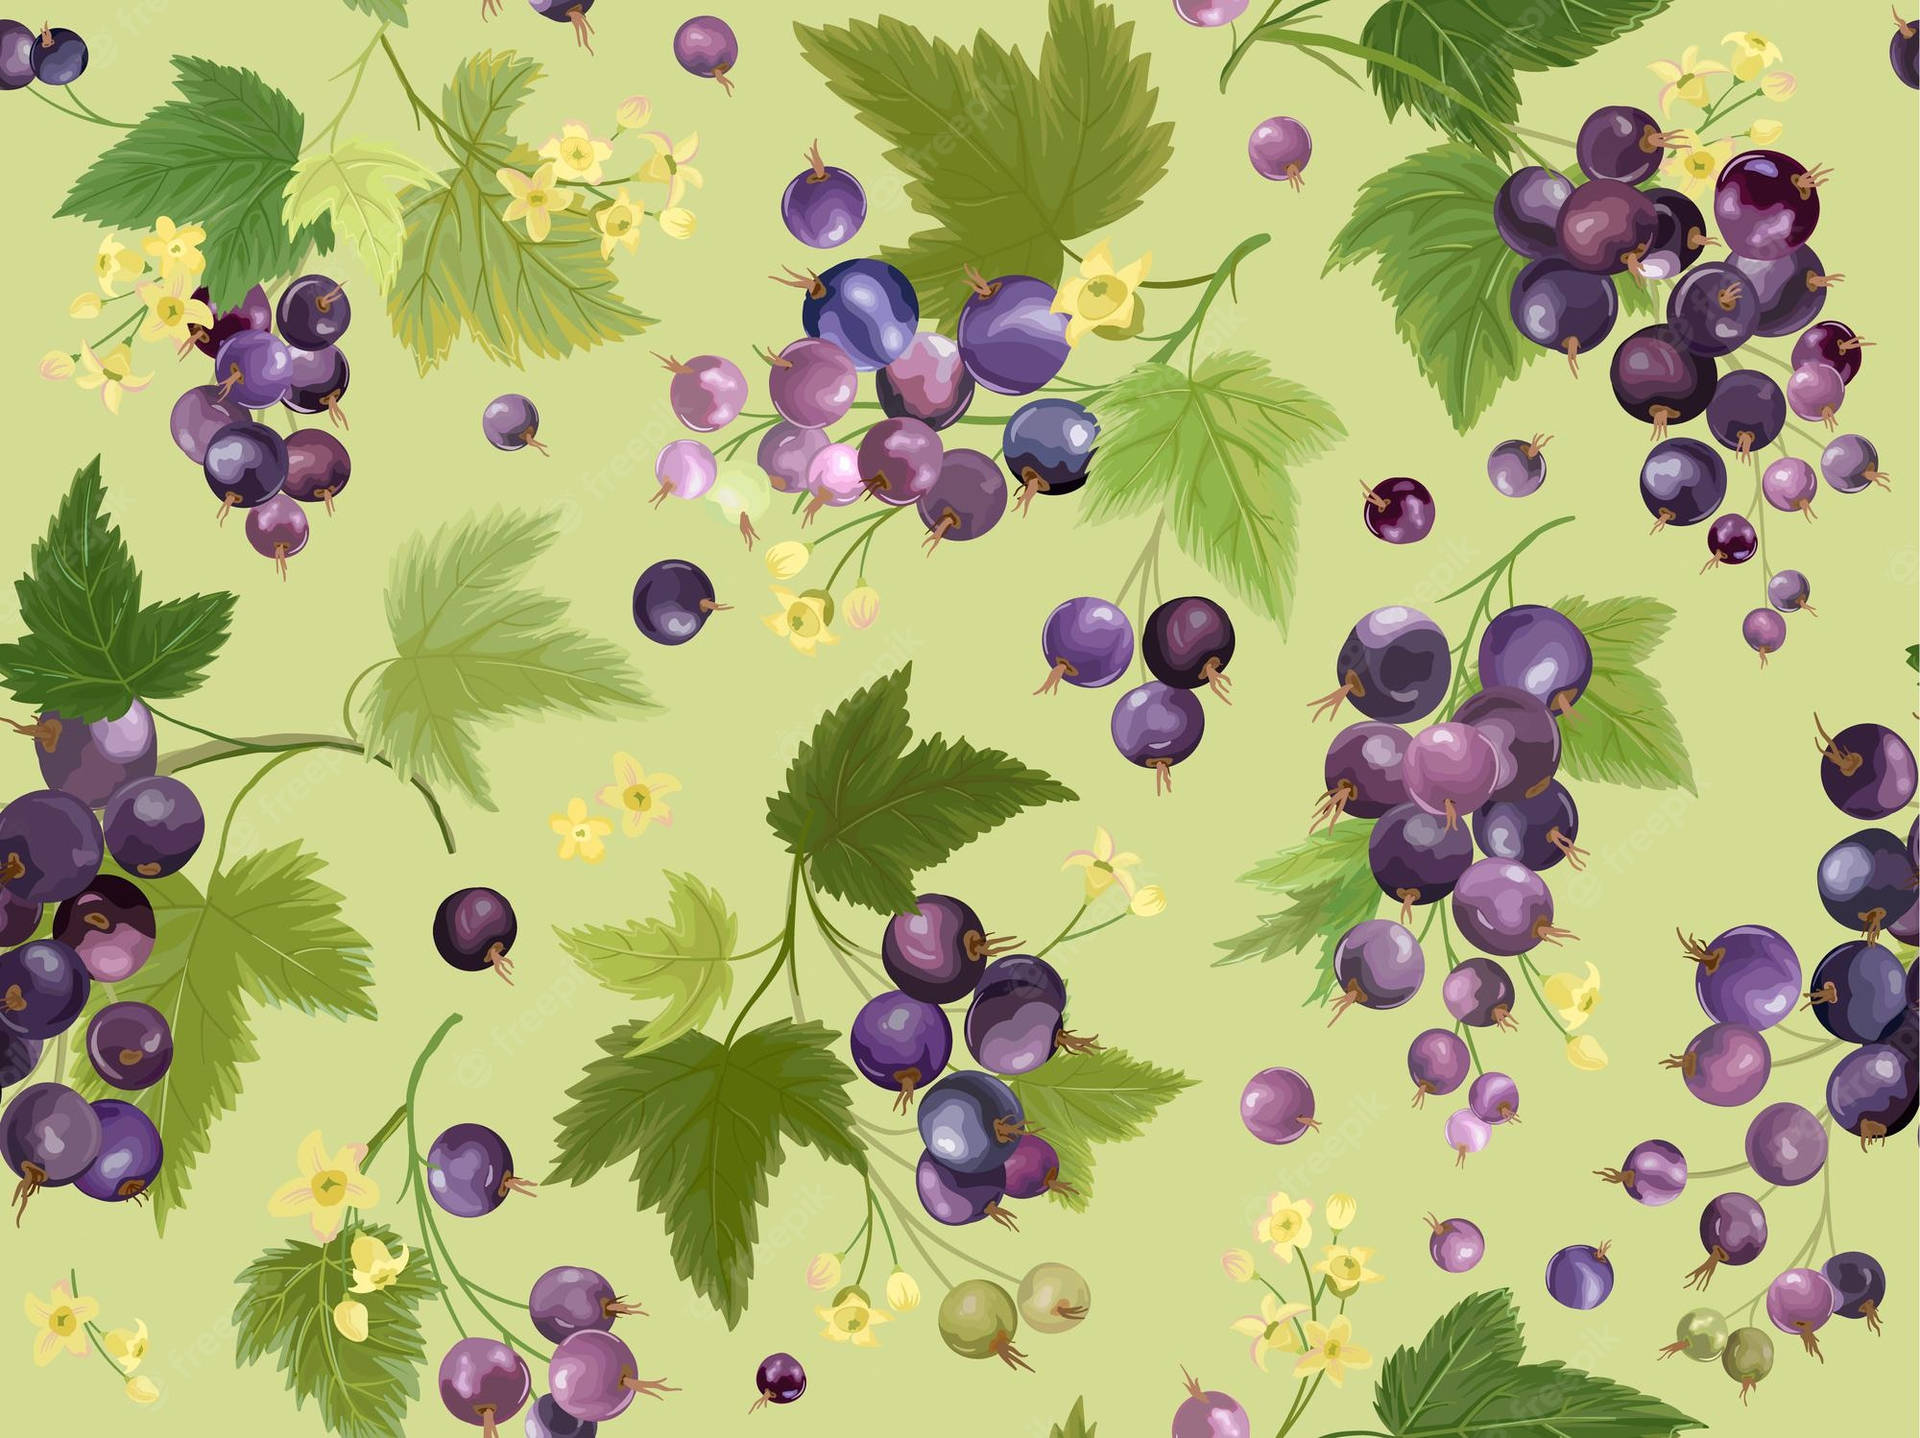 Caption: Artful Representation of Ripe Black Currant Berries Wallpaper